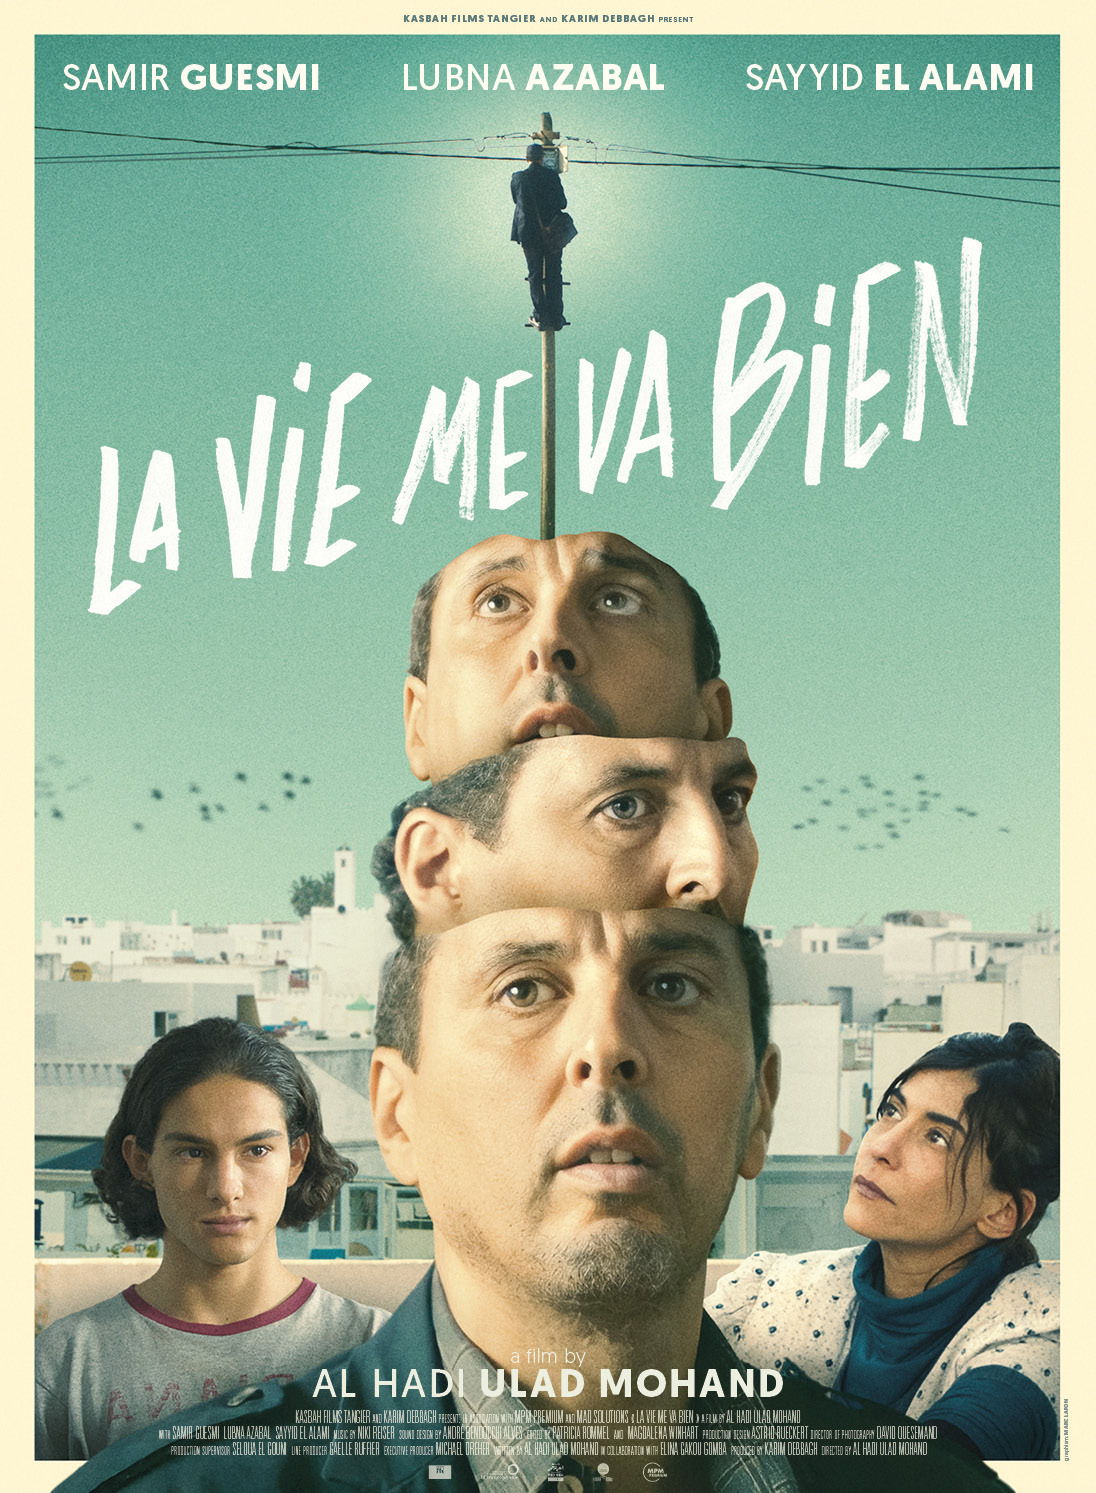 Extra Large Movie Poster Image for La vie me va bien (#1 of 2)